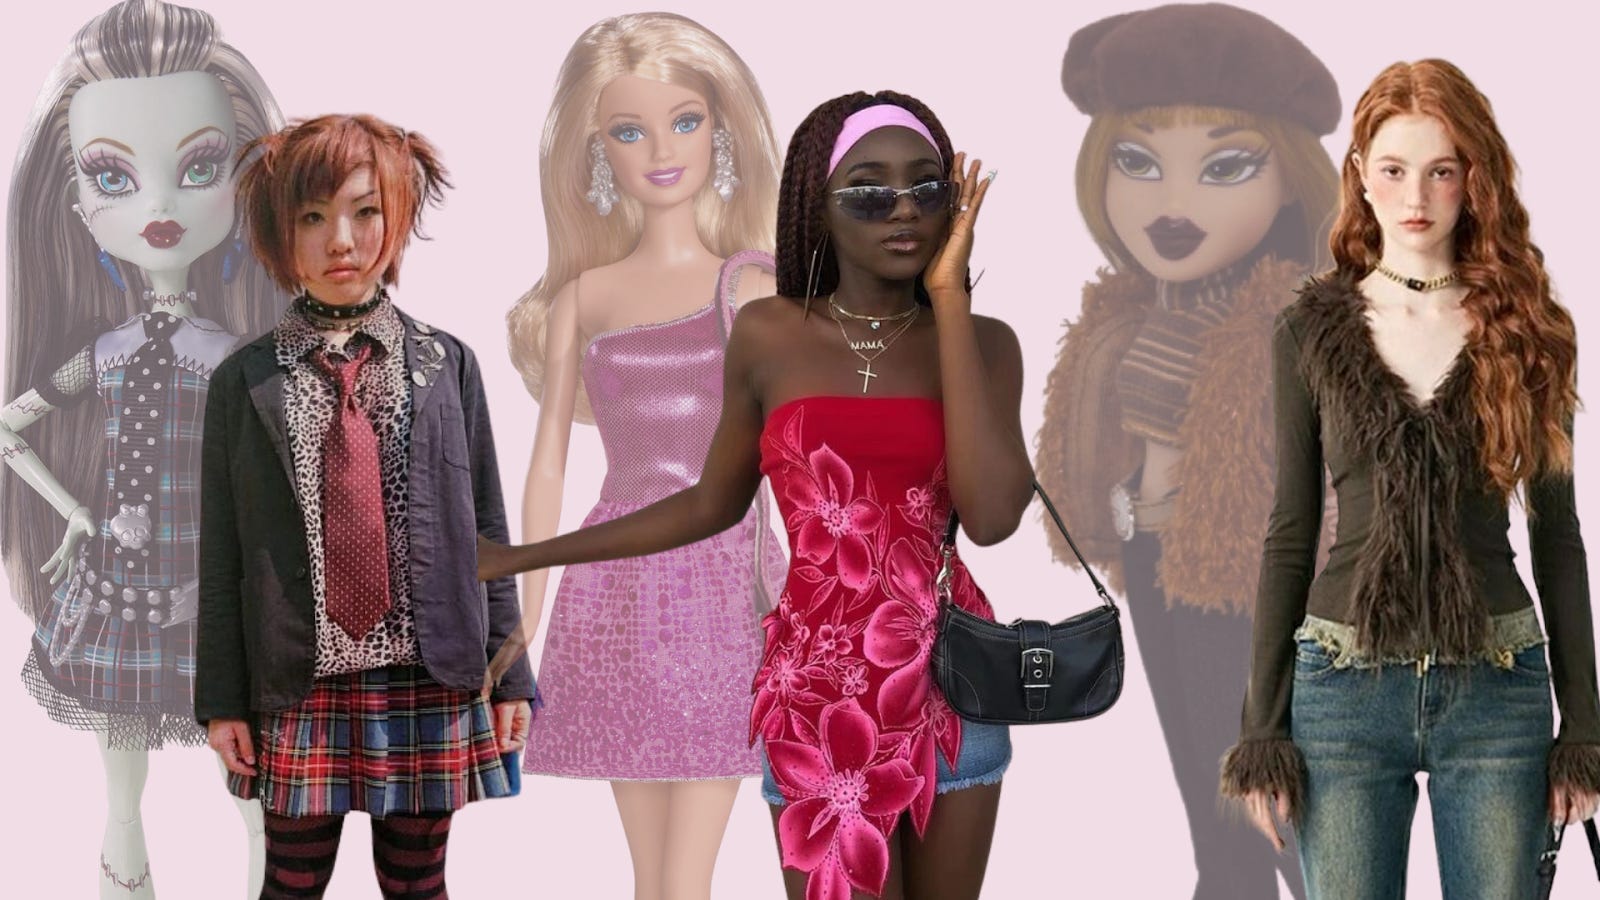 Bratz World AR Experience Brings Fashion Dolls to Life